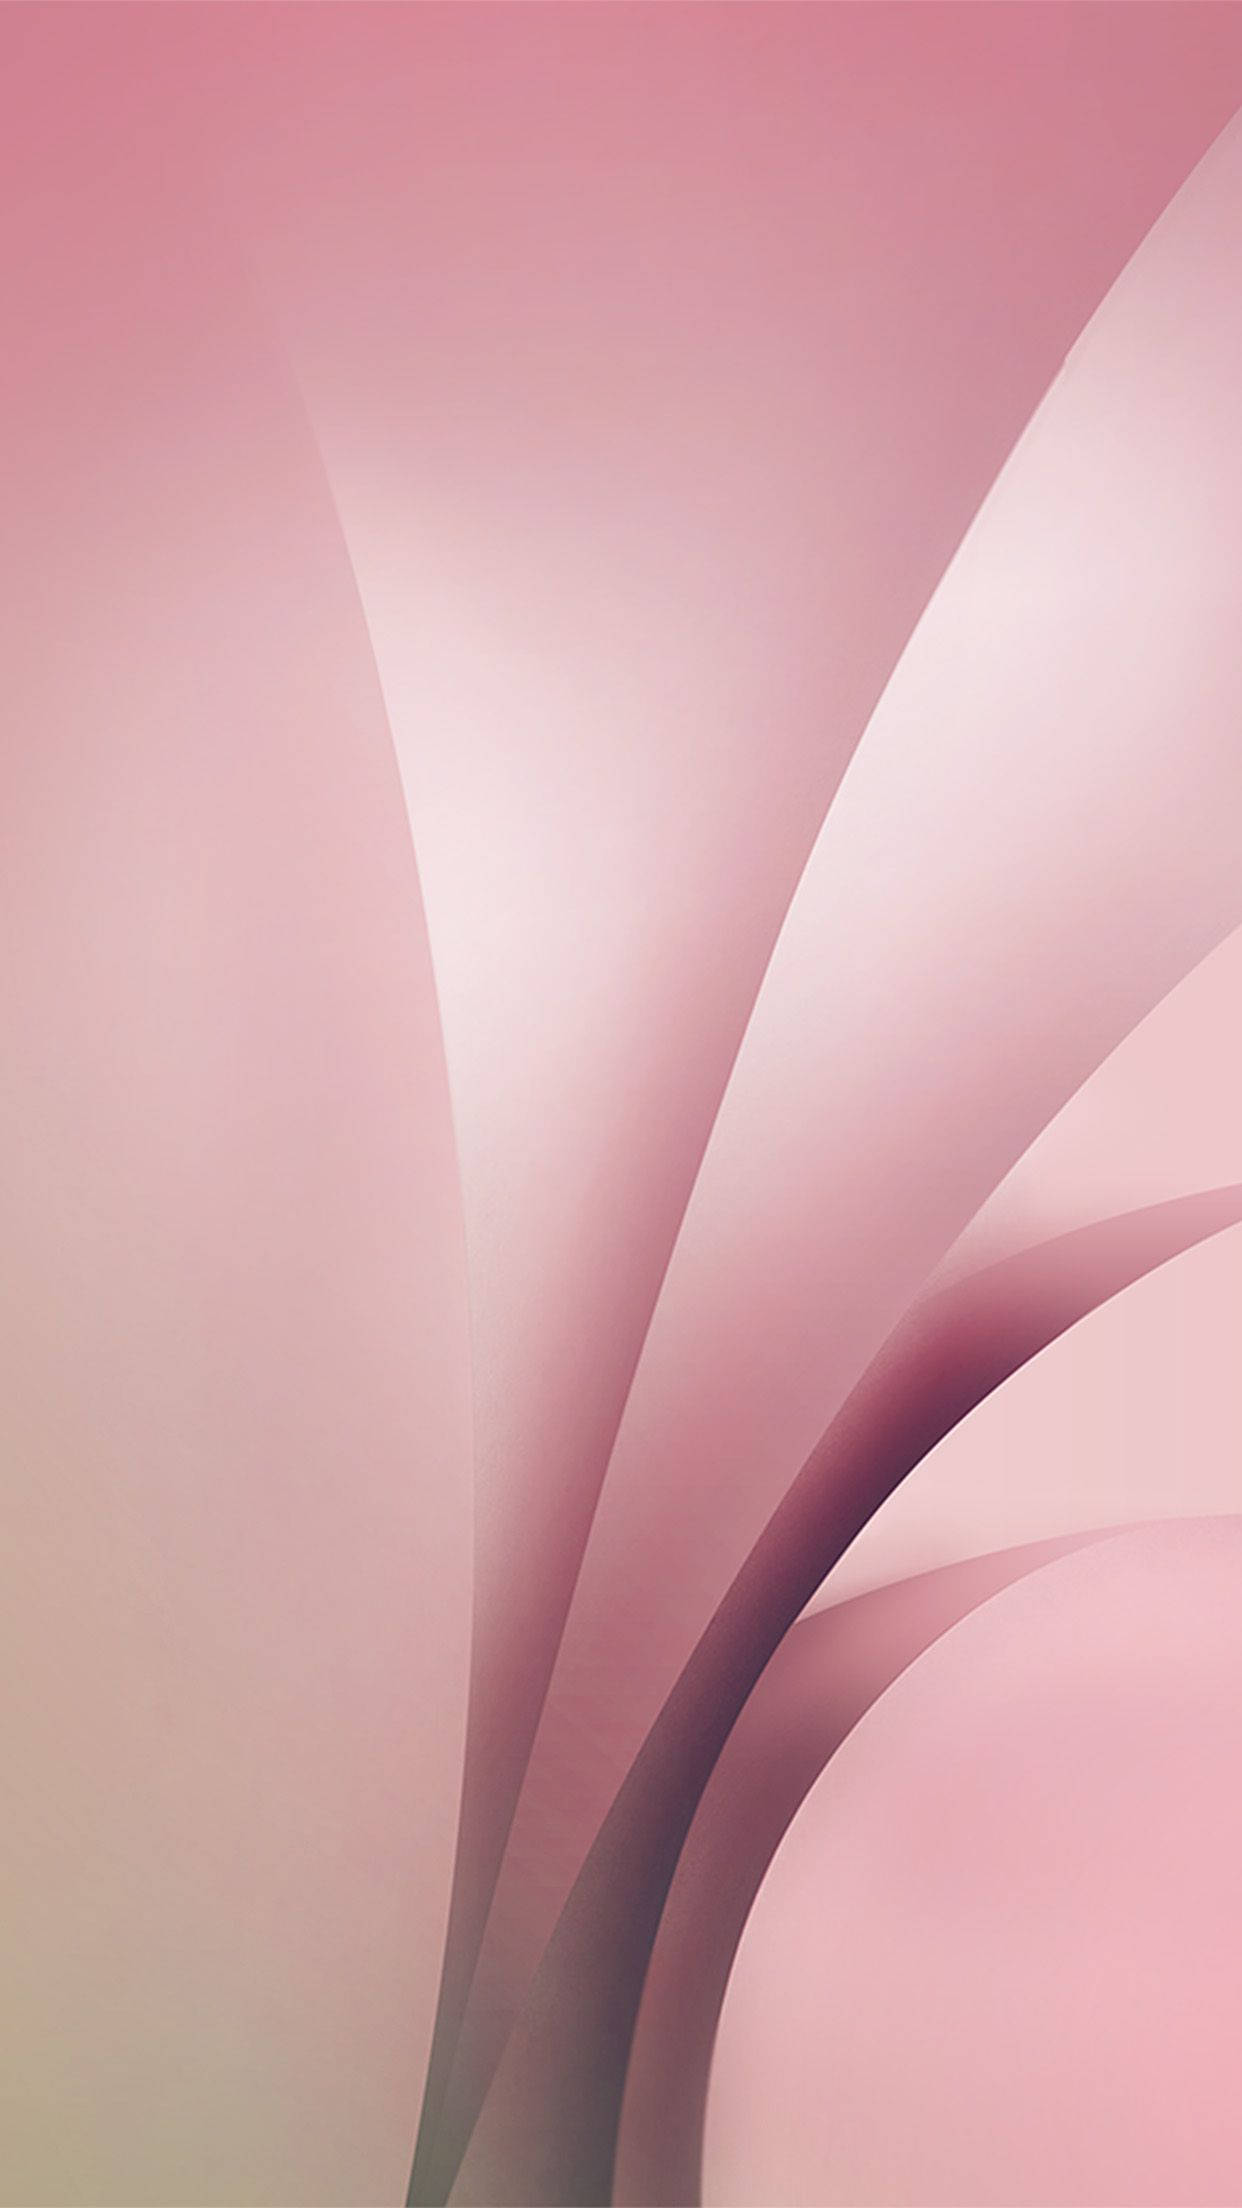 классная эстетичная абстрактная розовая волна